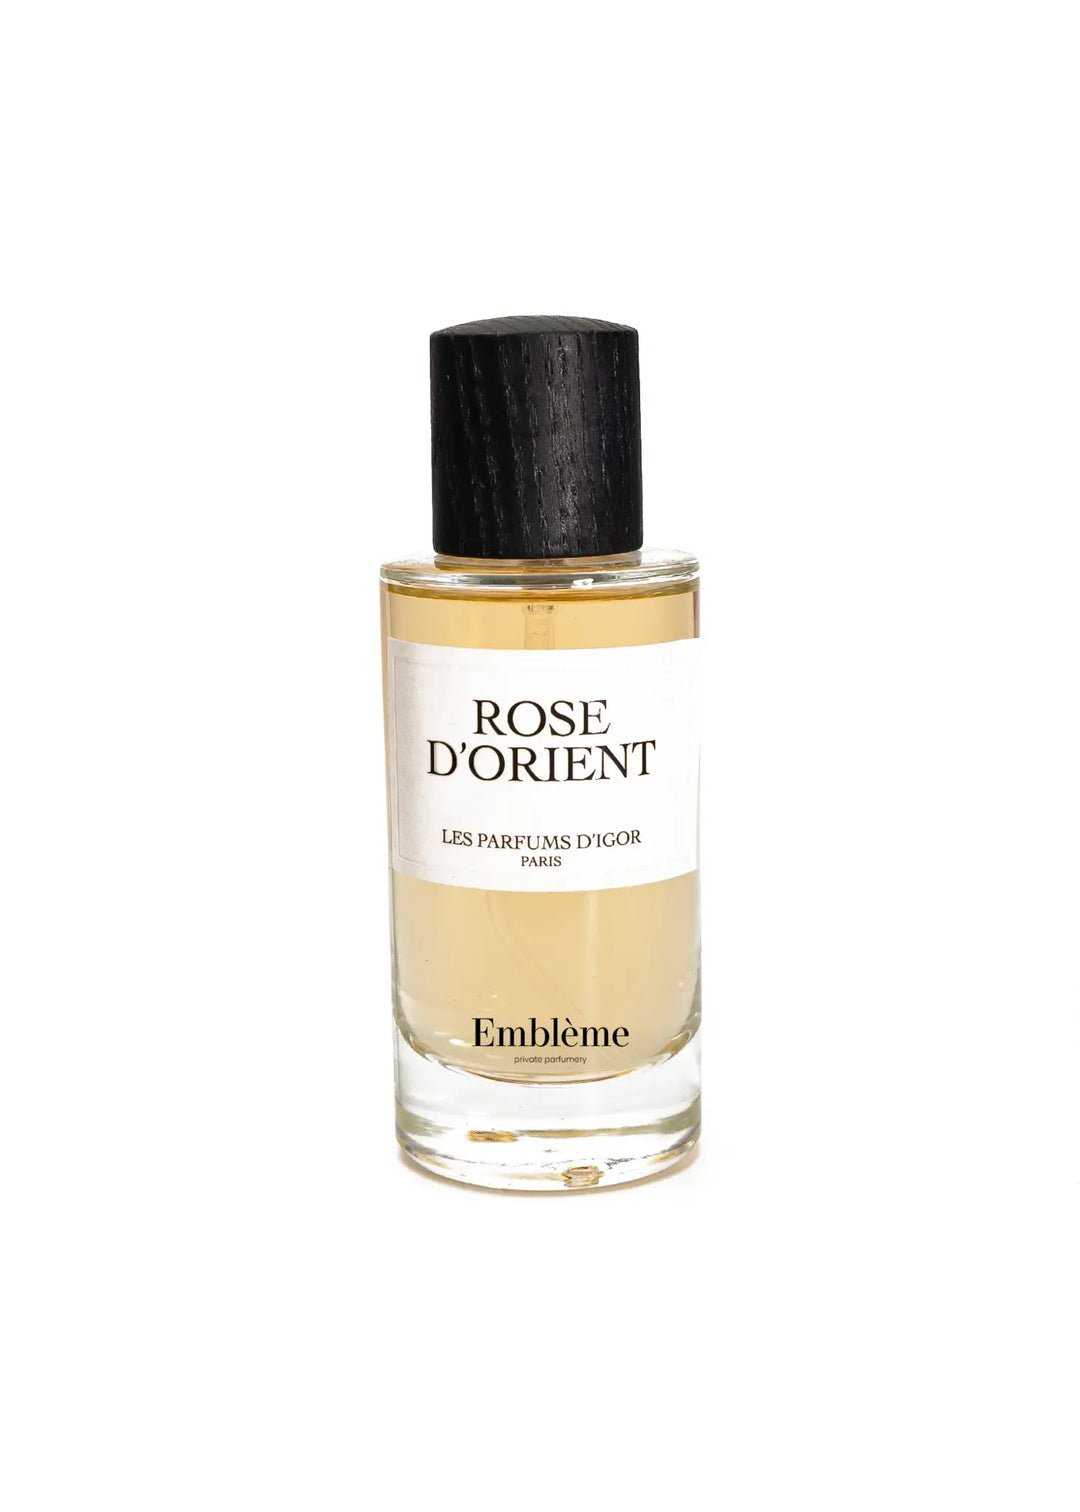 Rose d'Orient By iGOR - EMBLEME - Showroom Privé